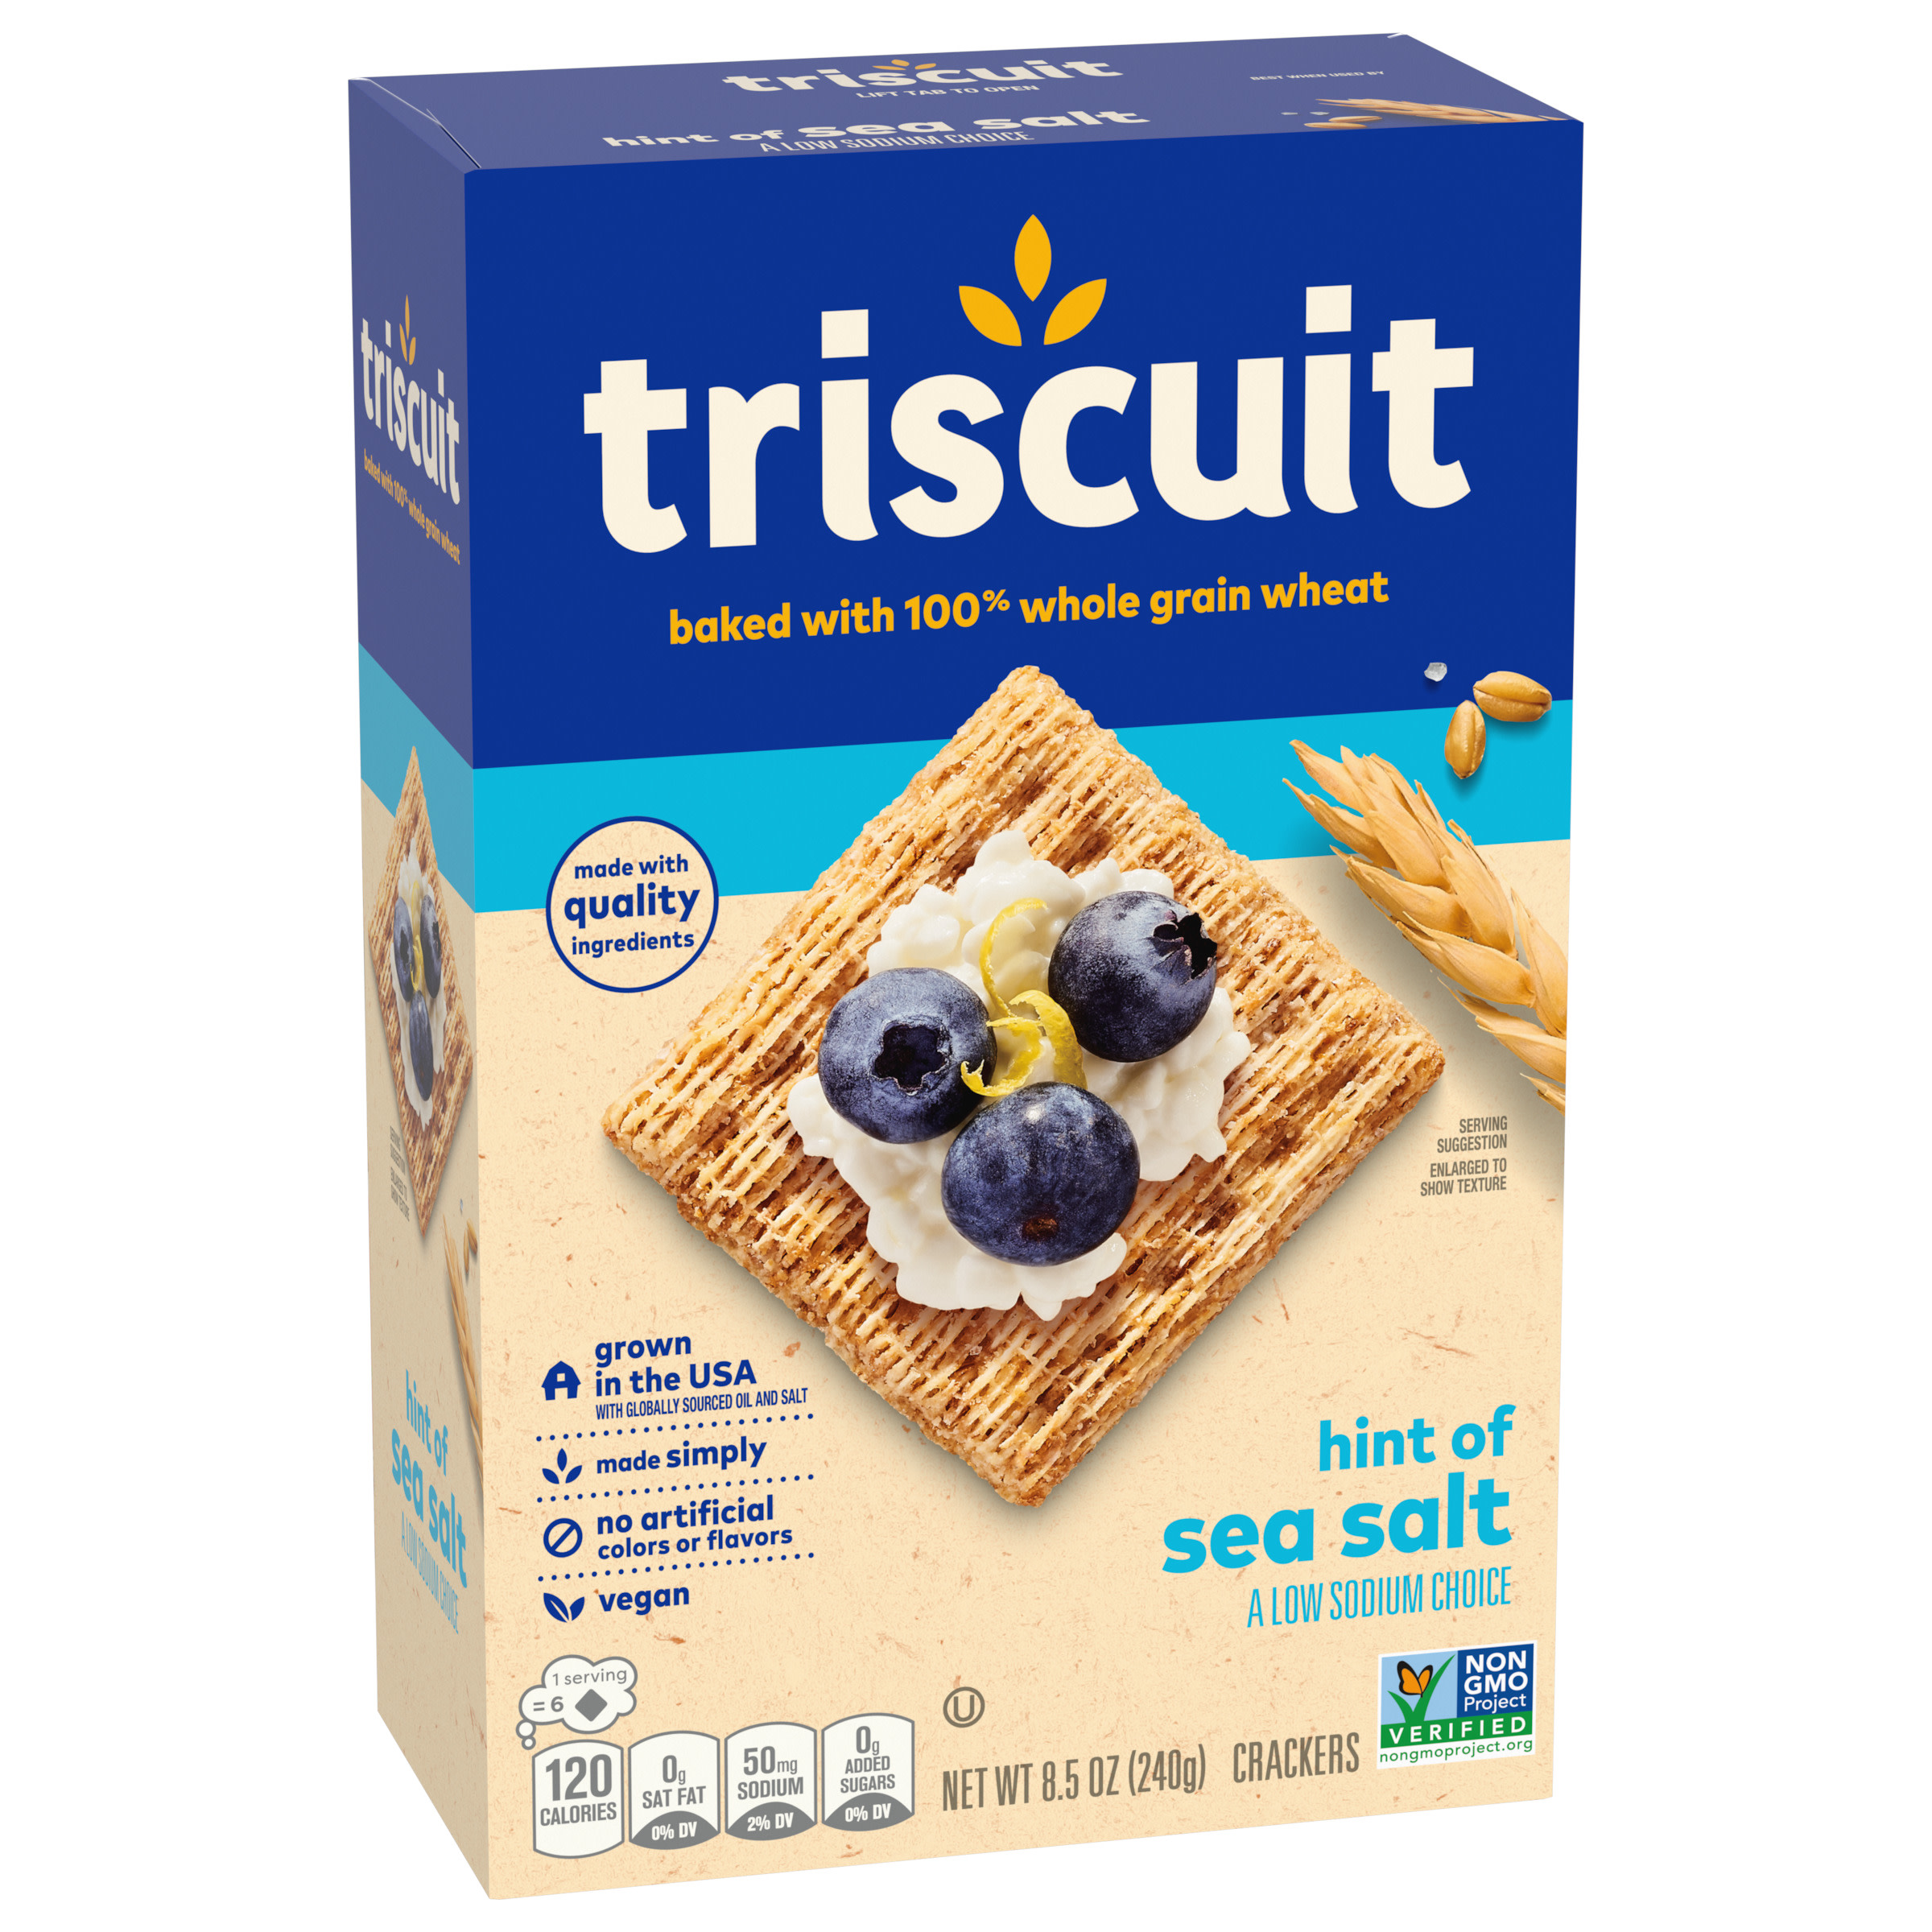 Triscuit Hint of Sea Salt Whole Grain Wheat Crackers, Vegan Crackers, 8.5 oz - image 3 of 16